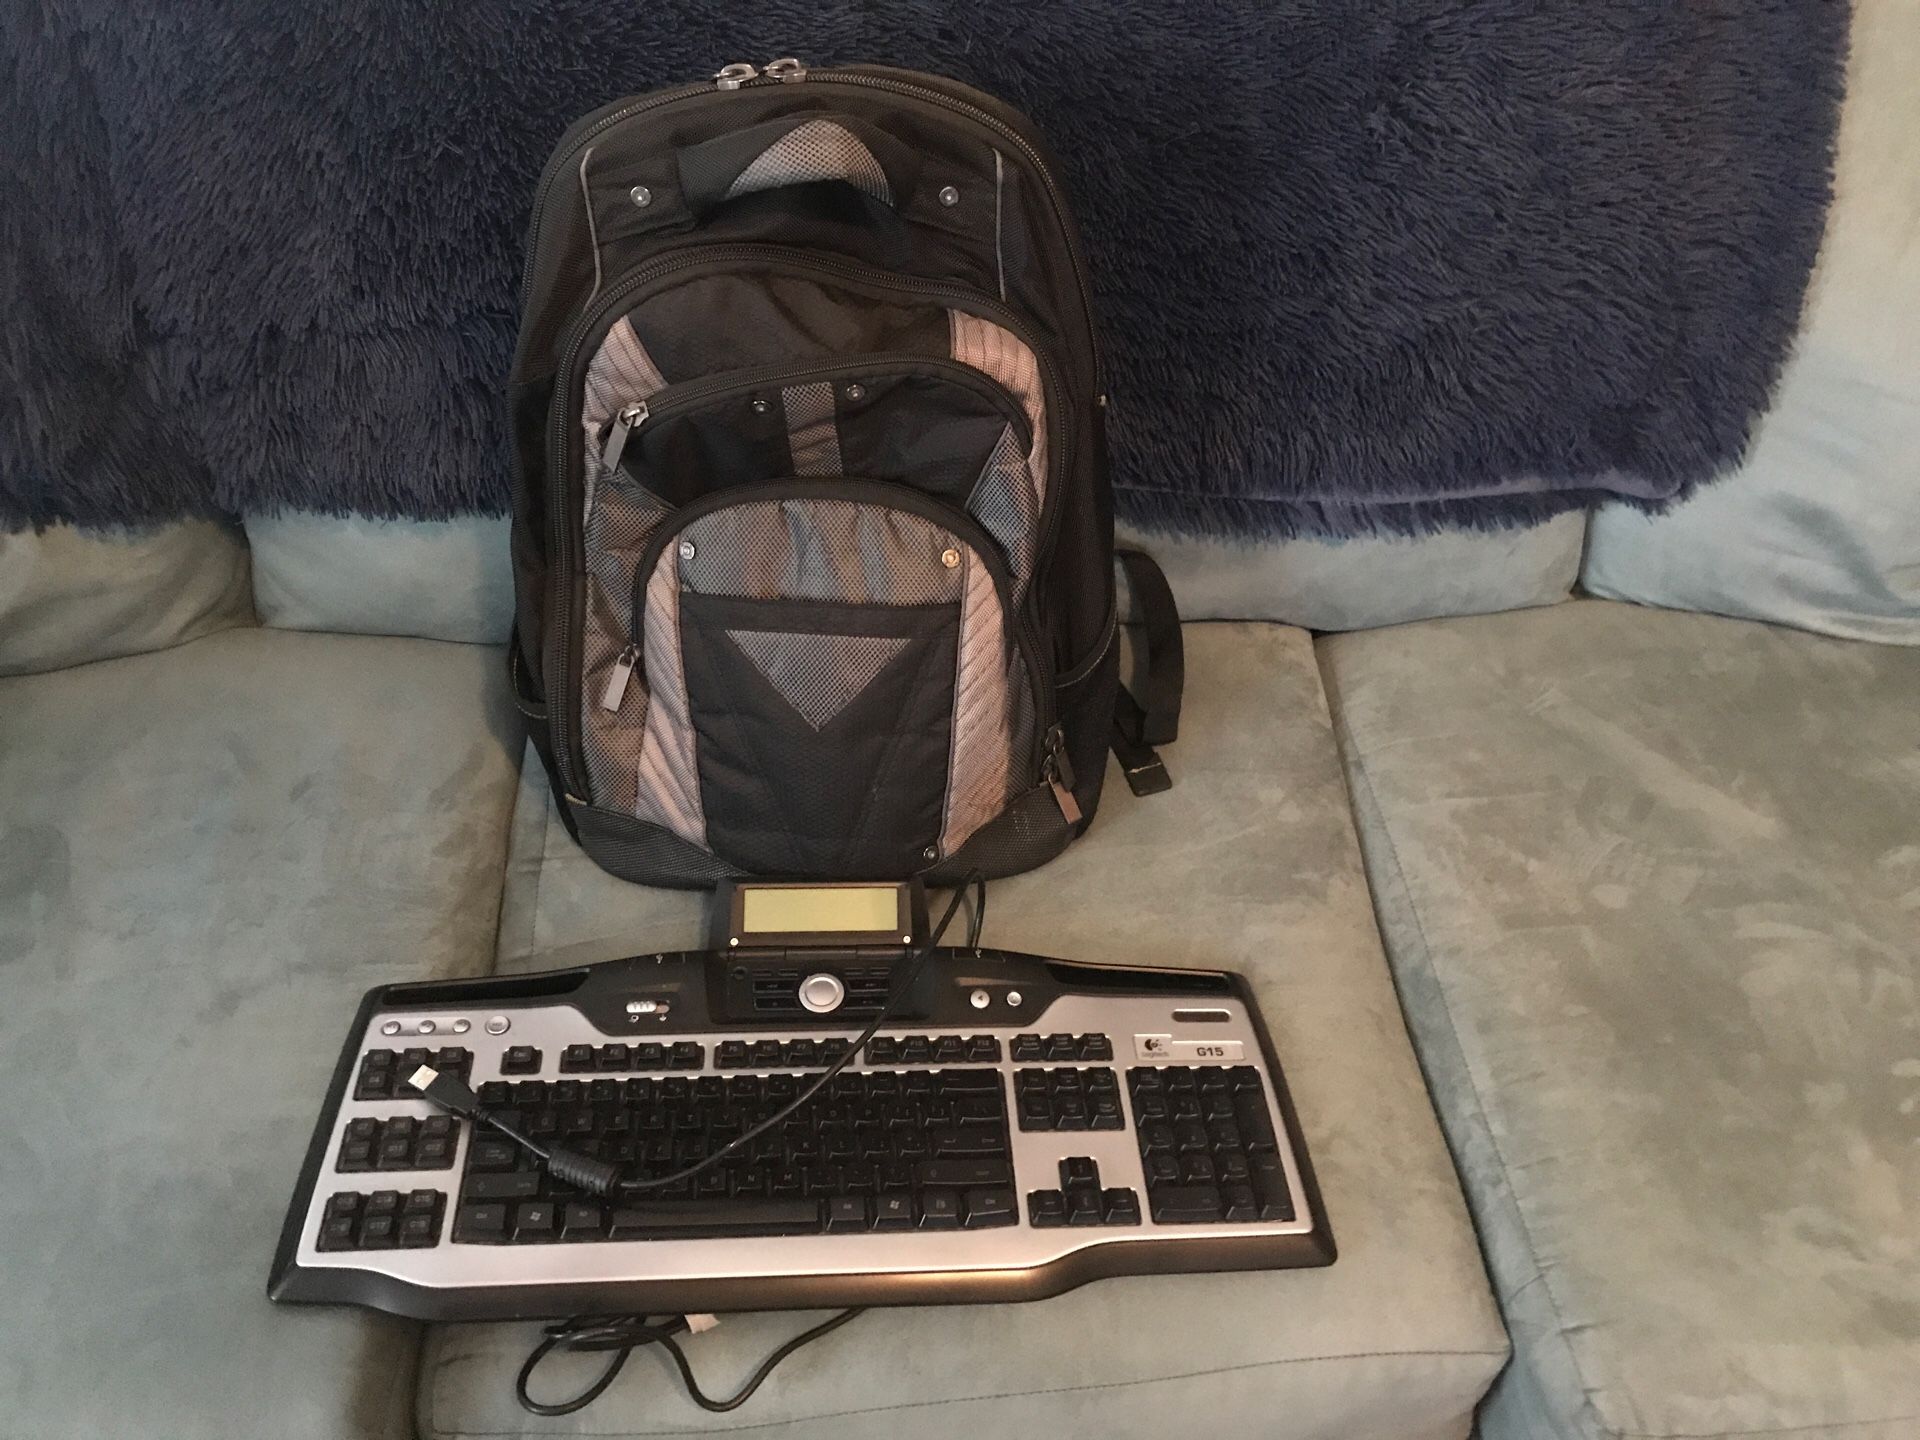 Logitech External Keyboard and Laptop Backpack